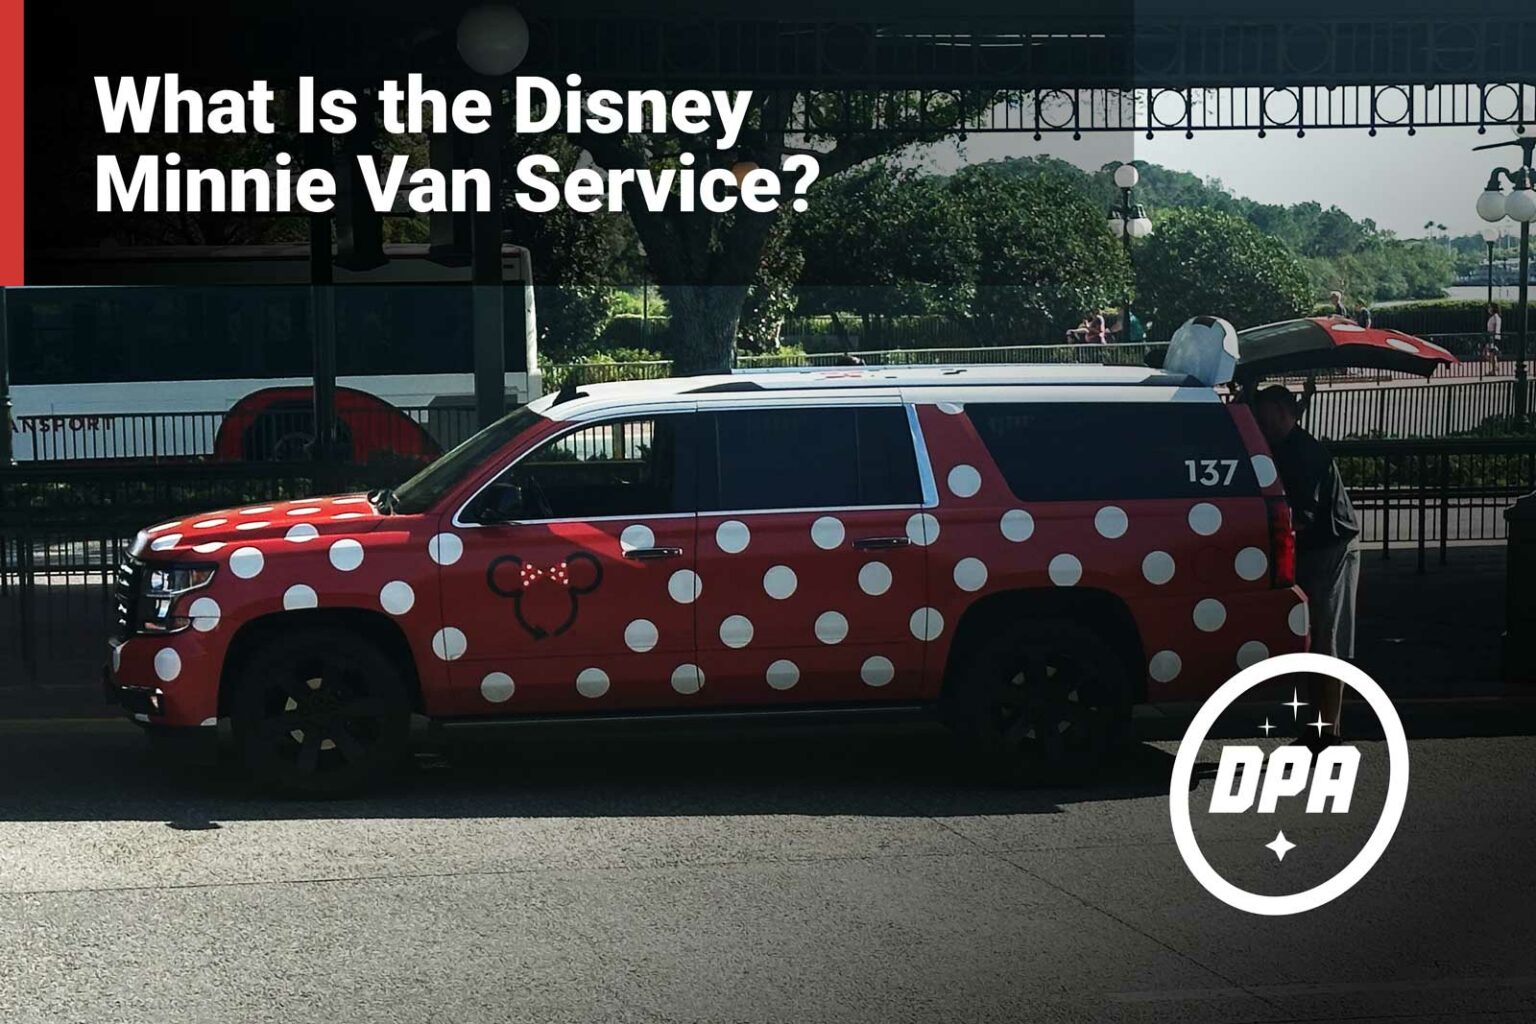 What is the Disney Minnie Van Service